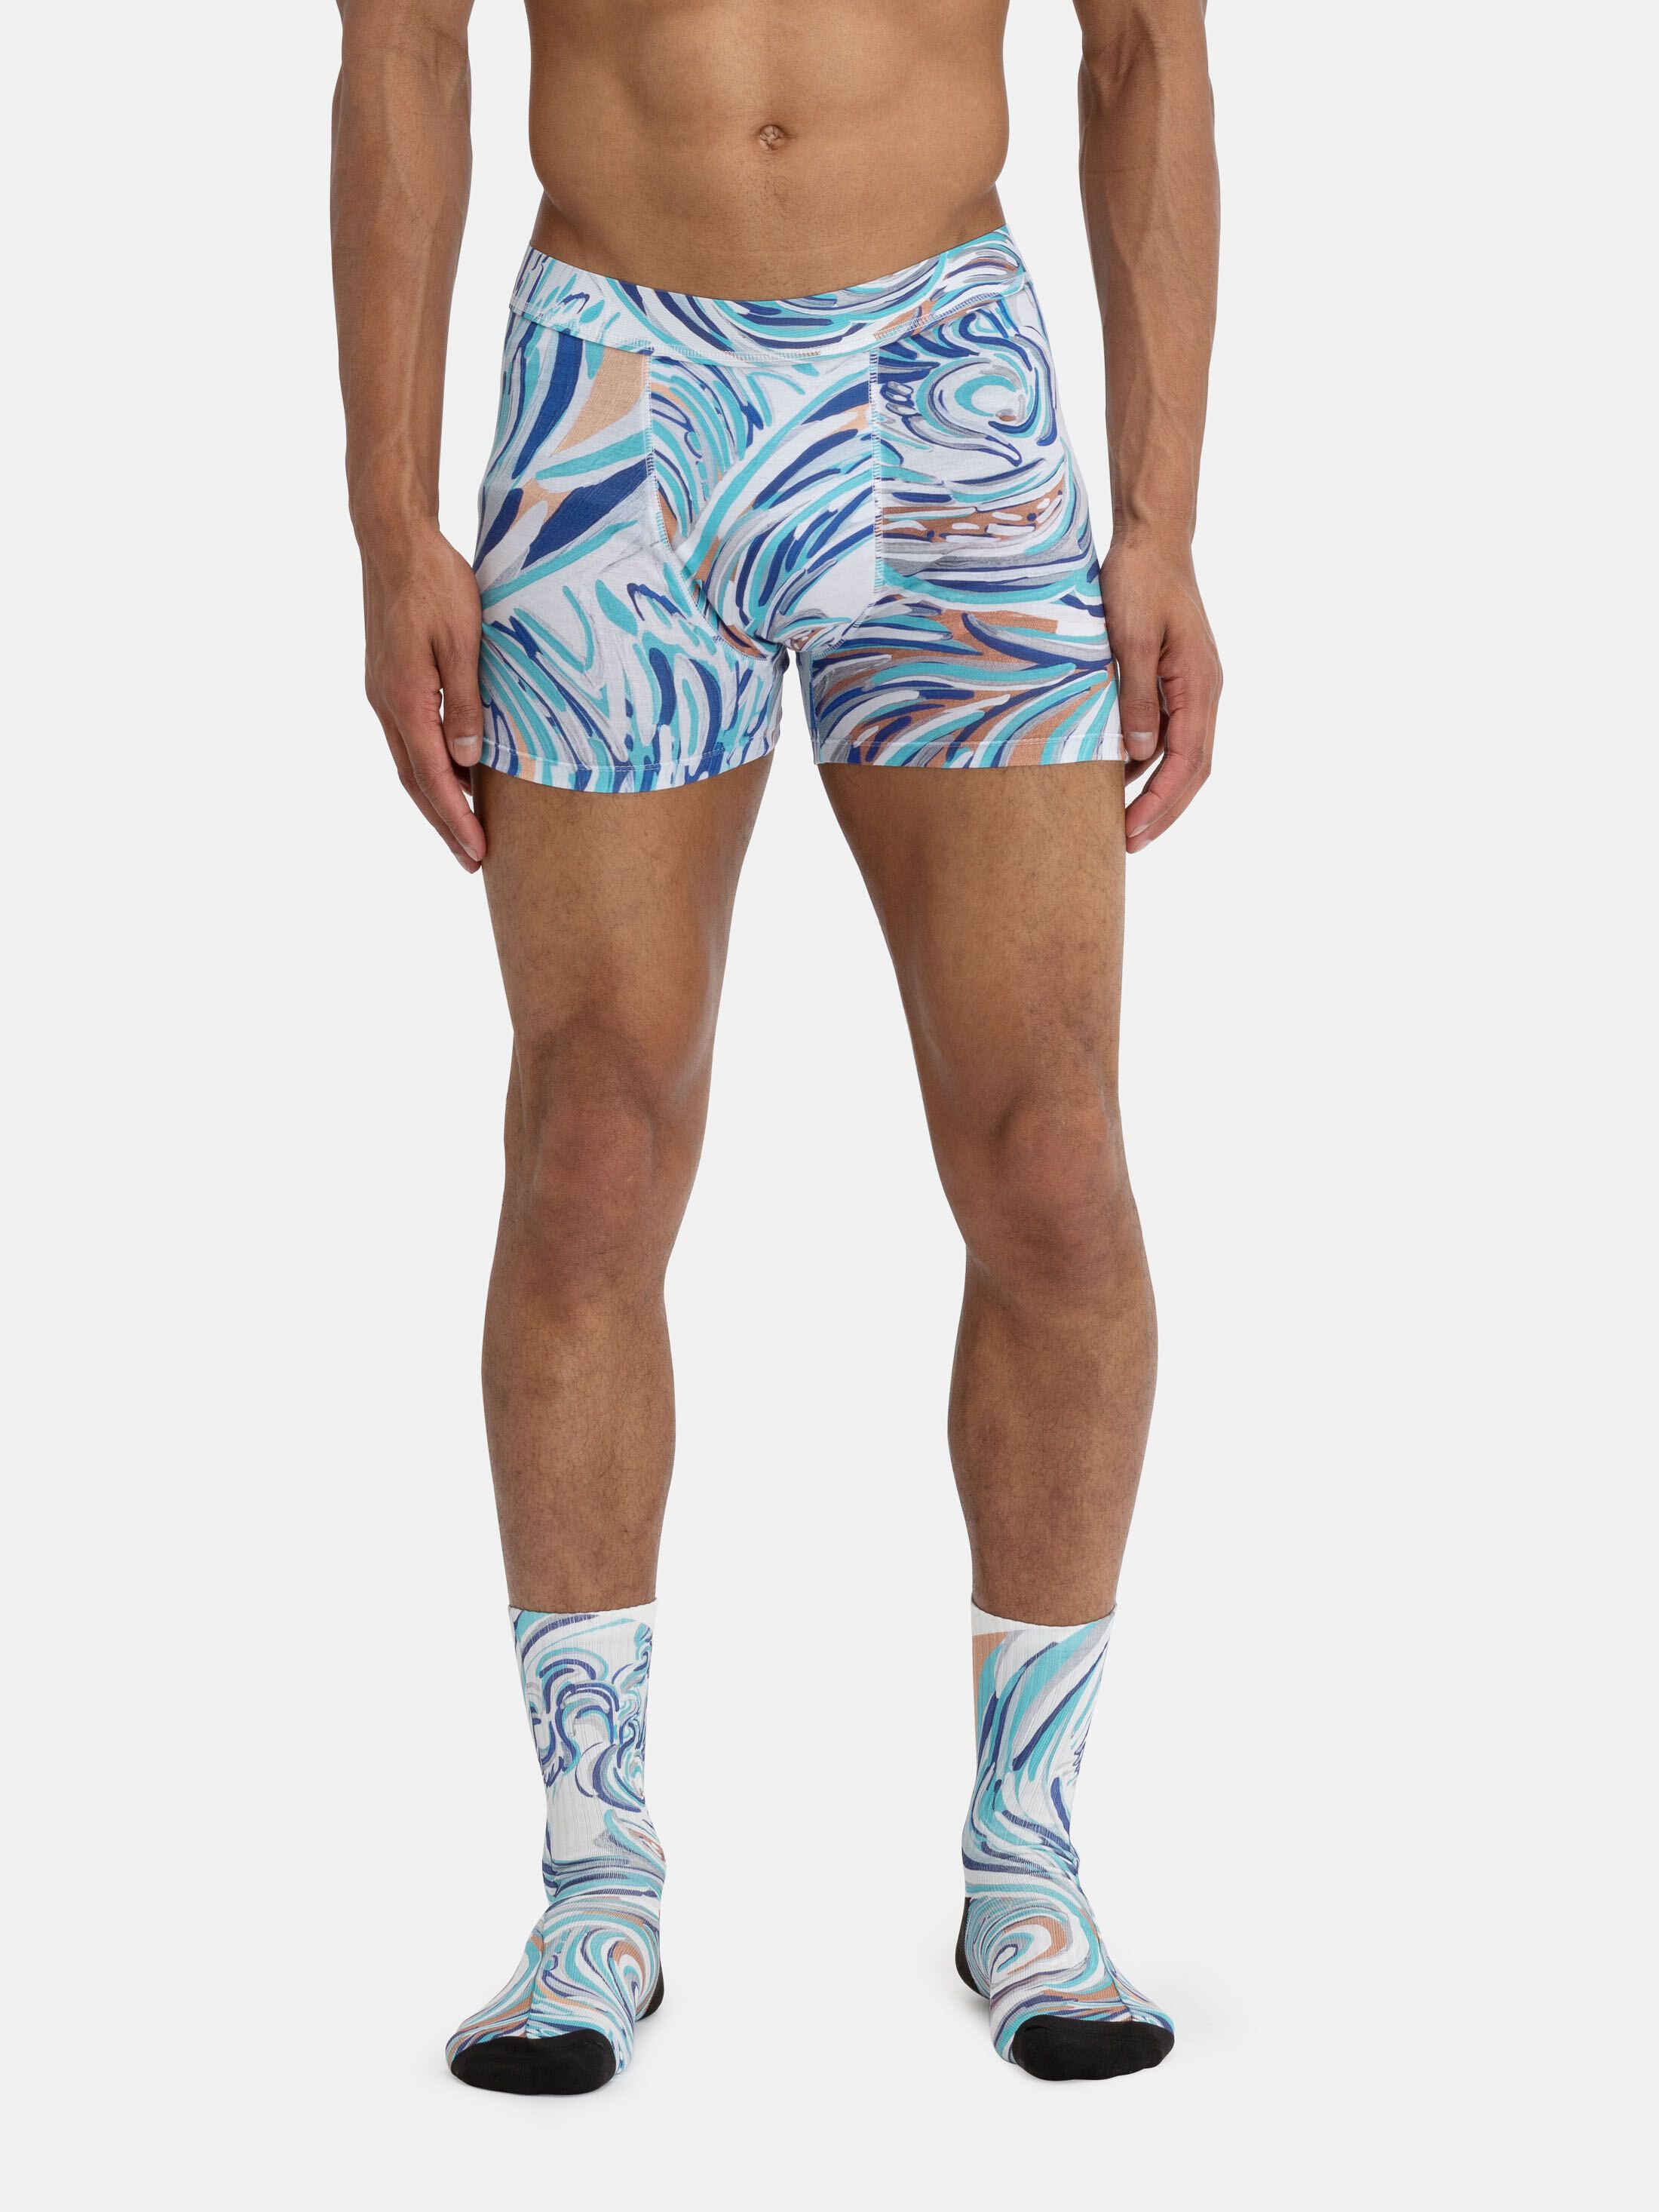 Personalised Mens Boxer Shorts Custom Printed Mens Pants Underwear